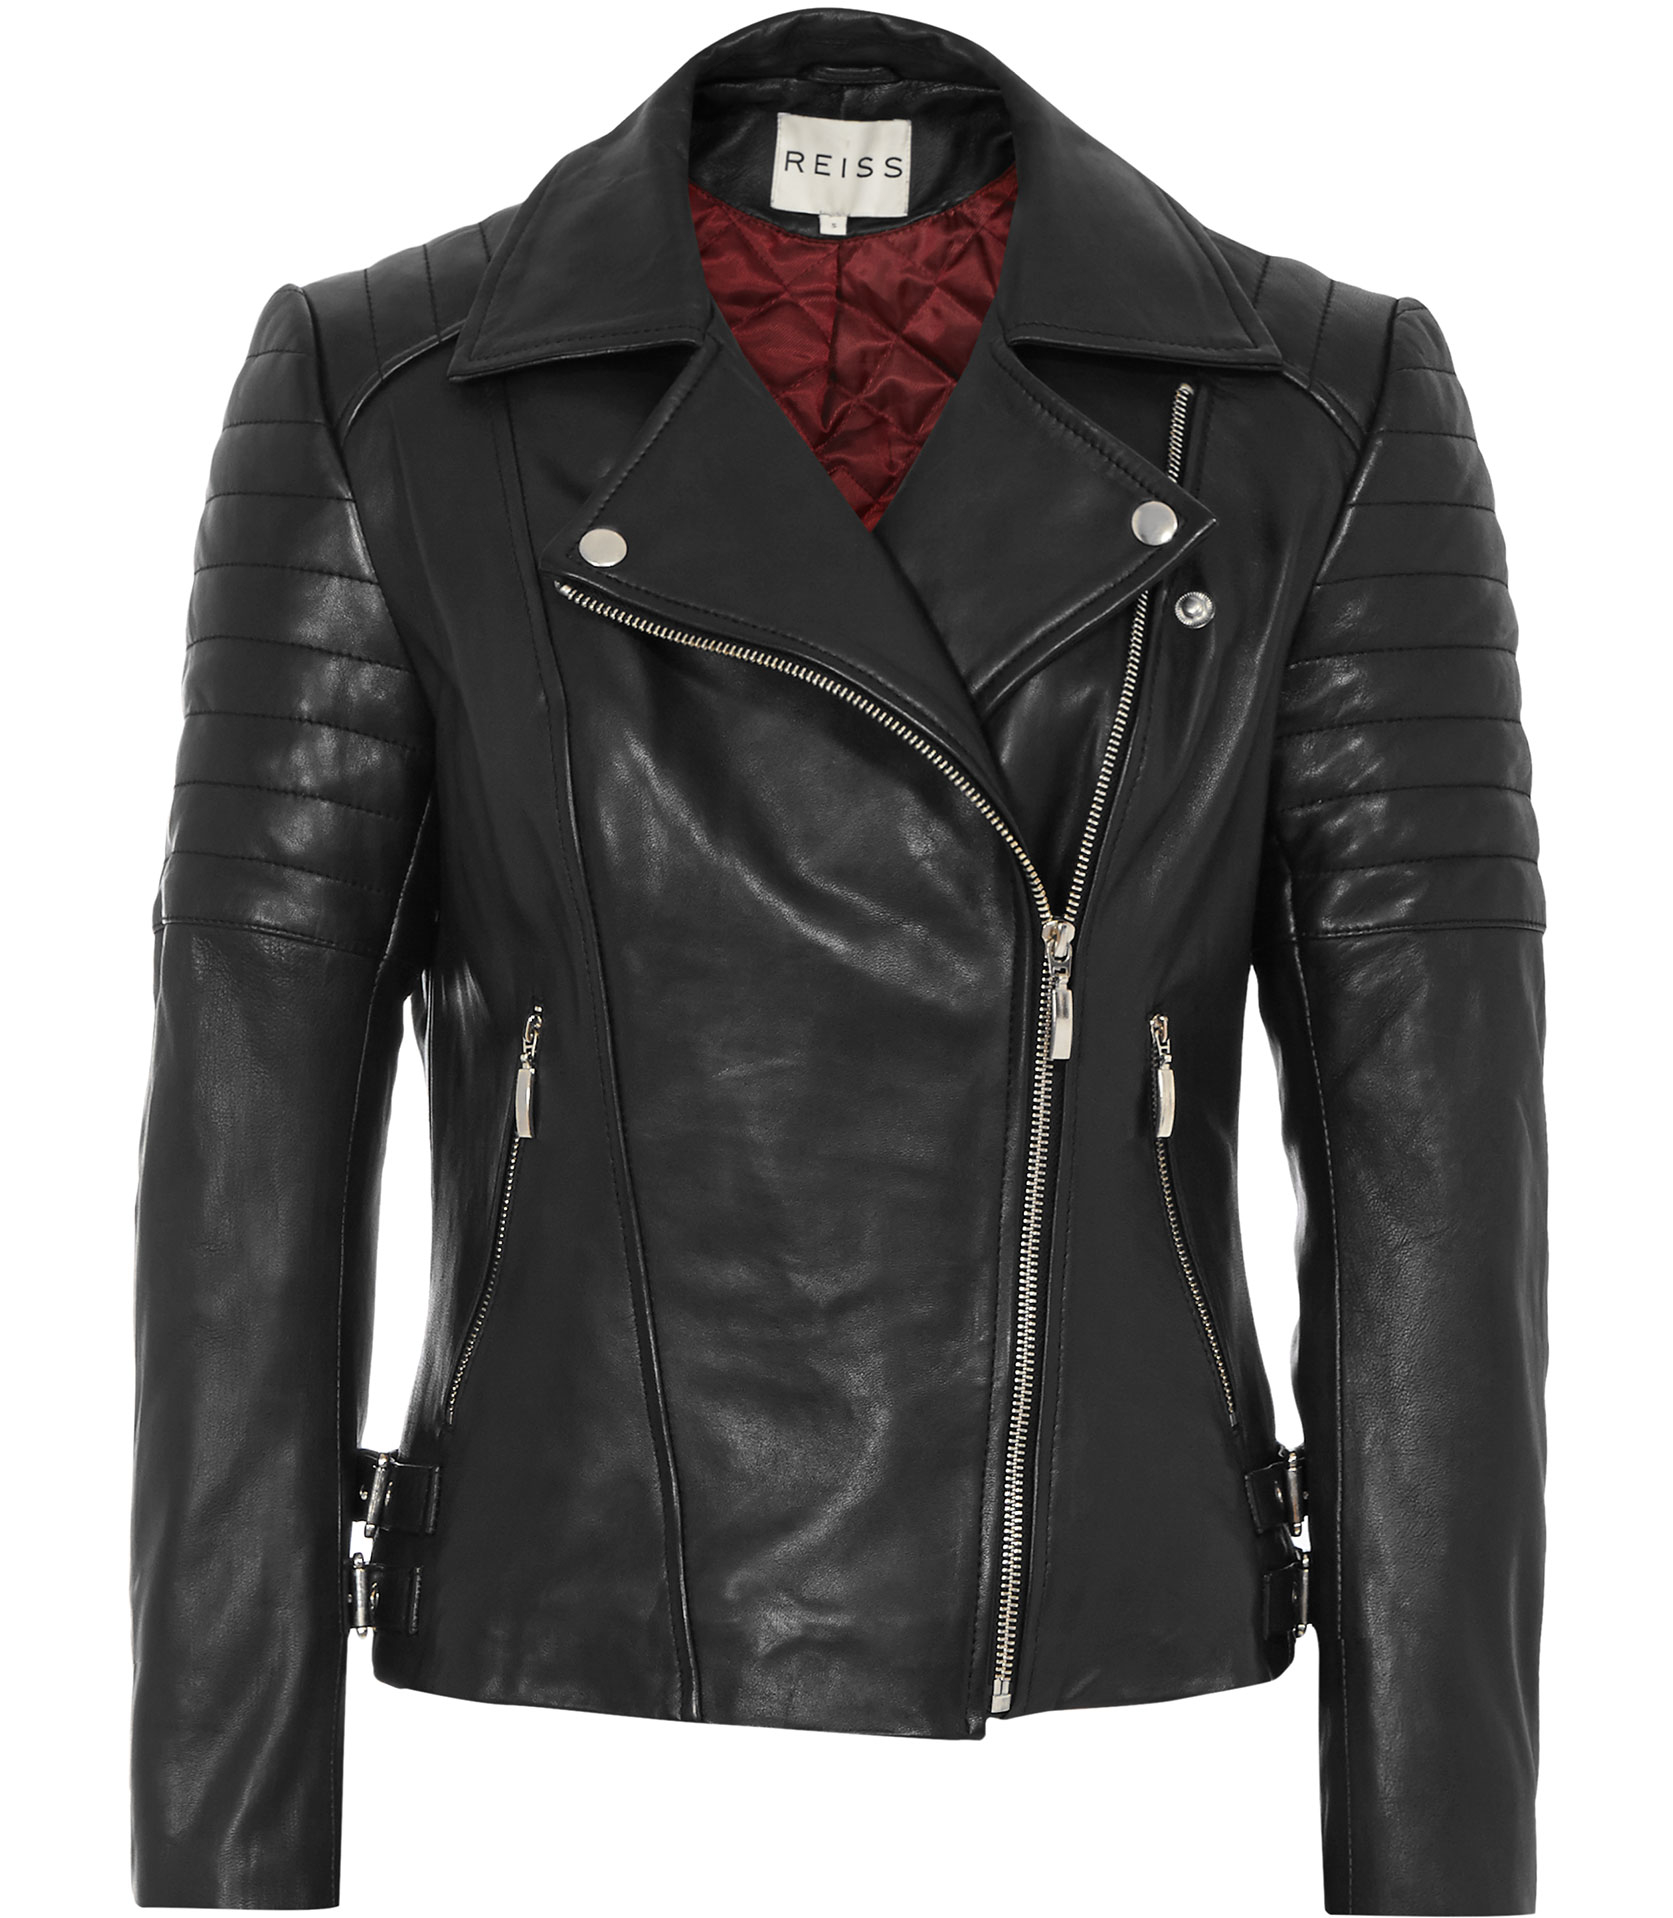 Reiss Topaz Quilted Leather Biker Jacket in Black - Lyst